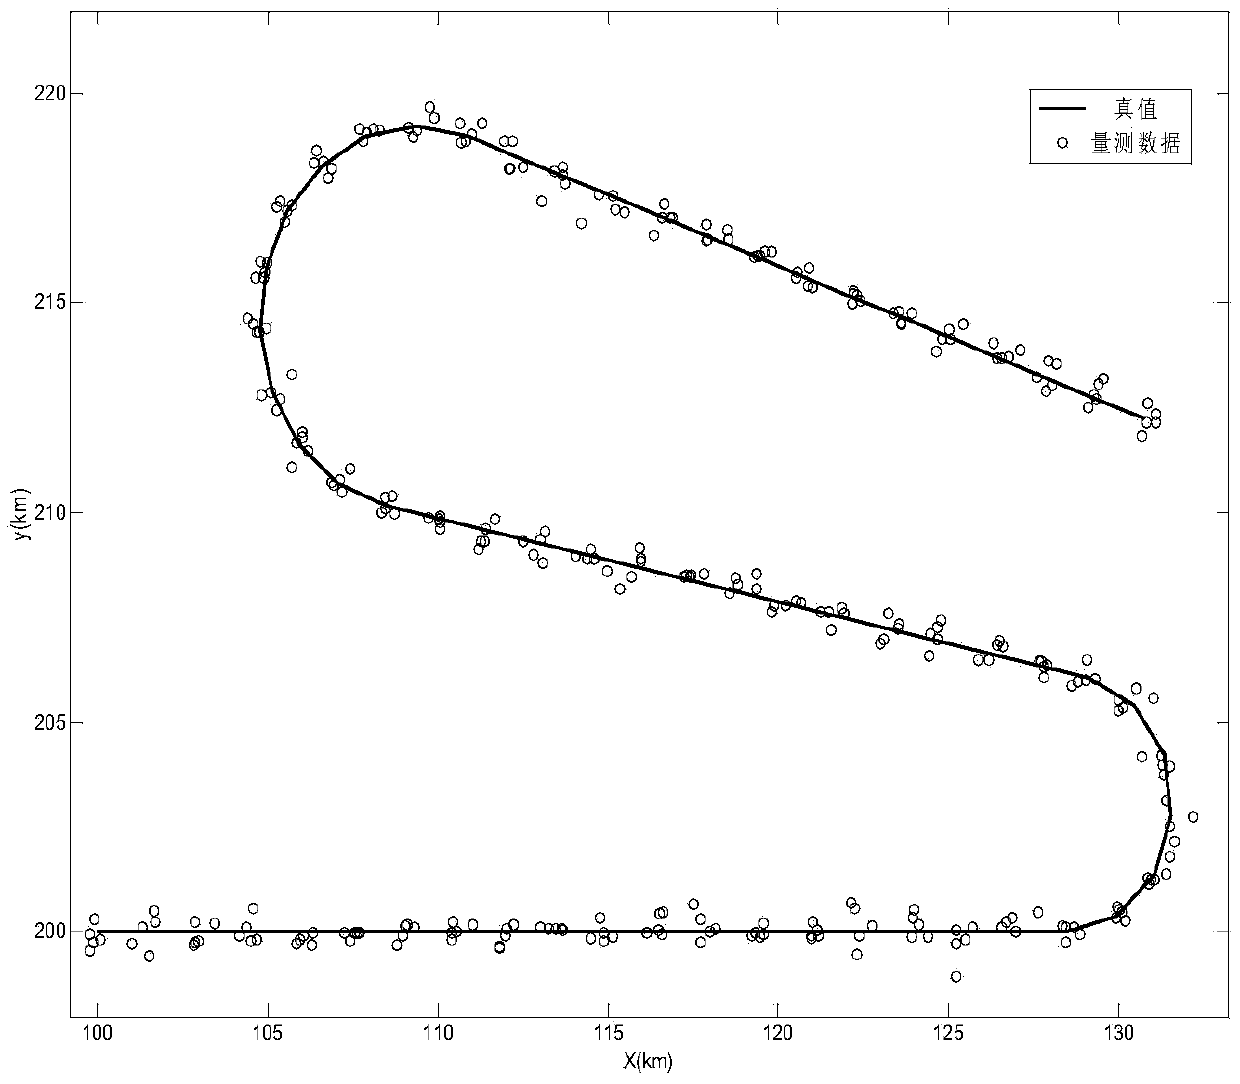 A multi-sensor maneuvering target tracking method based on the principle of maximum entropy